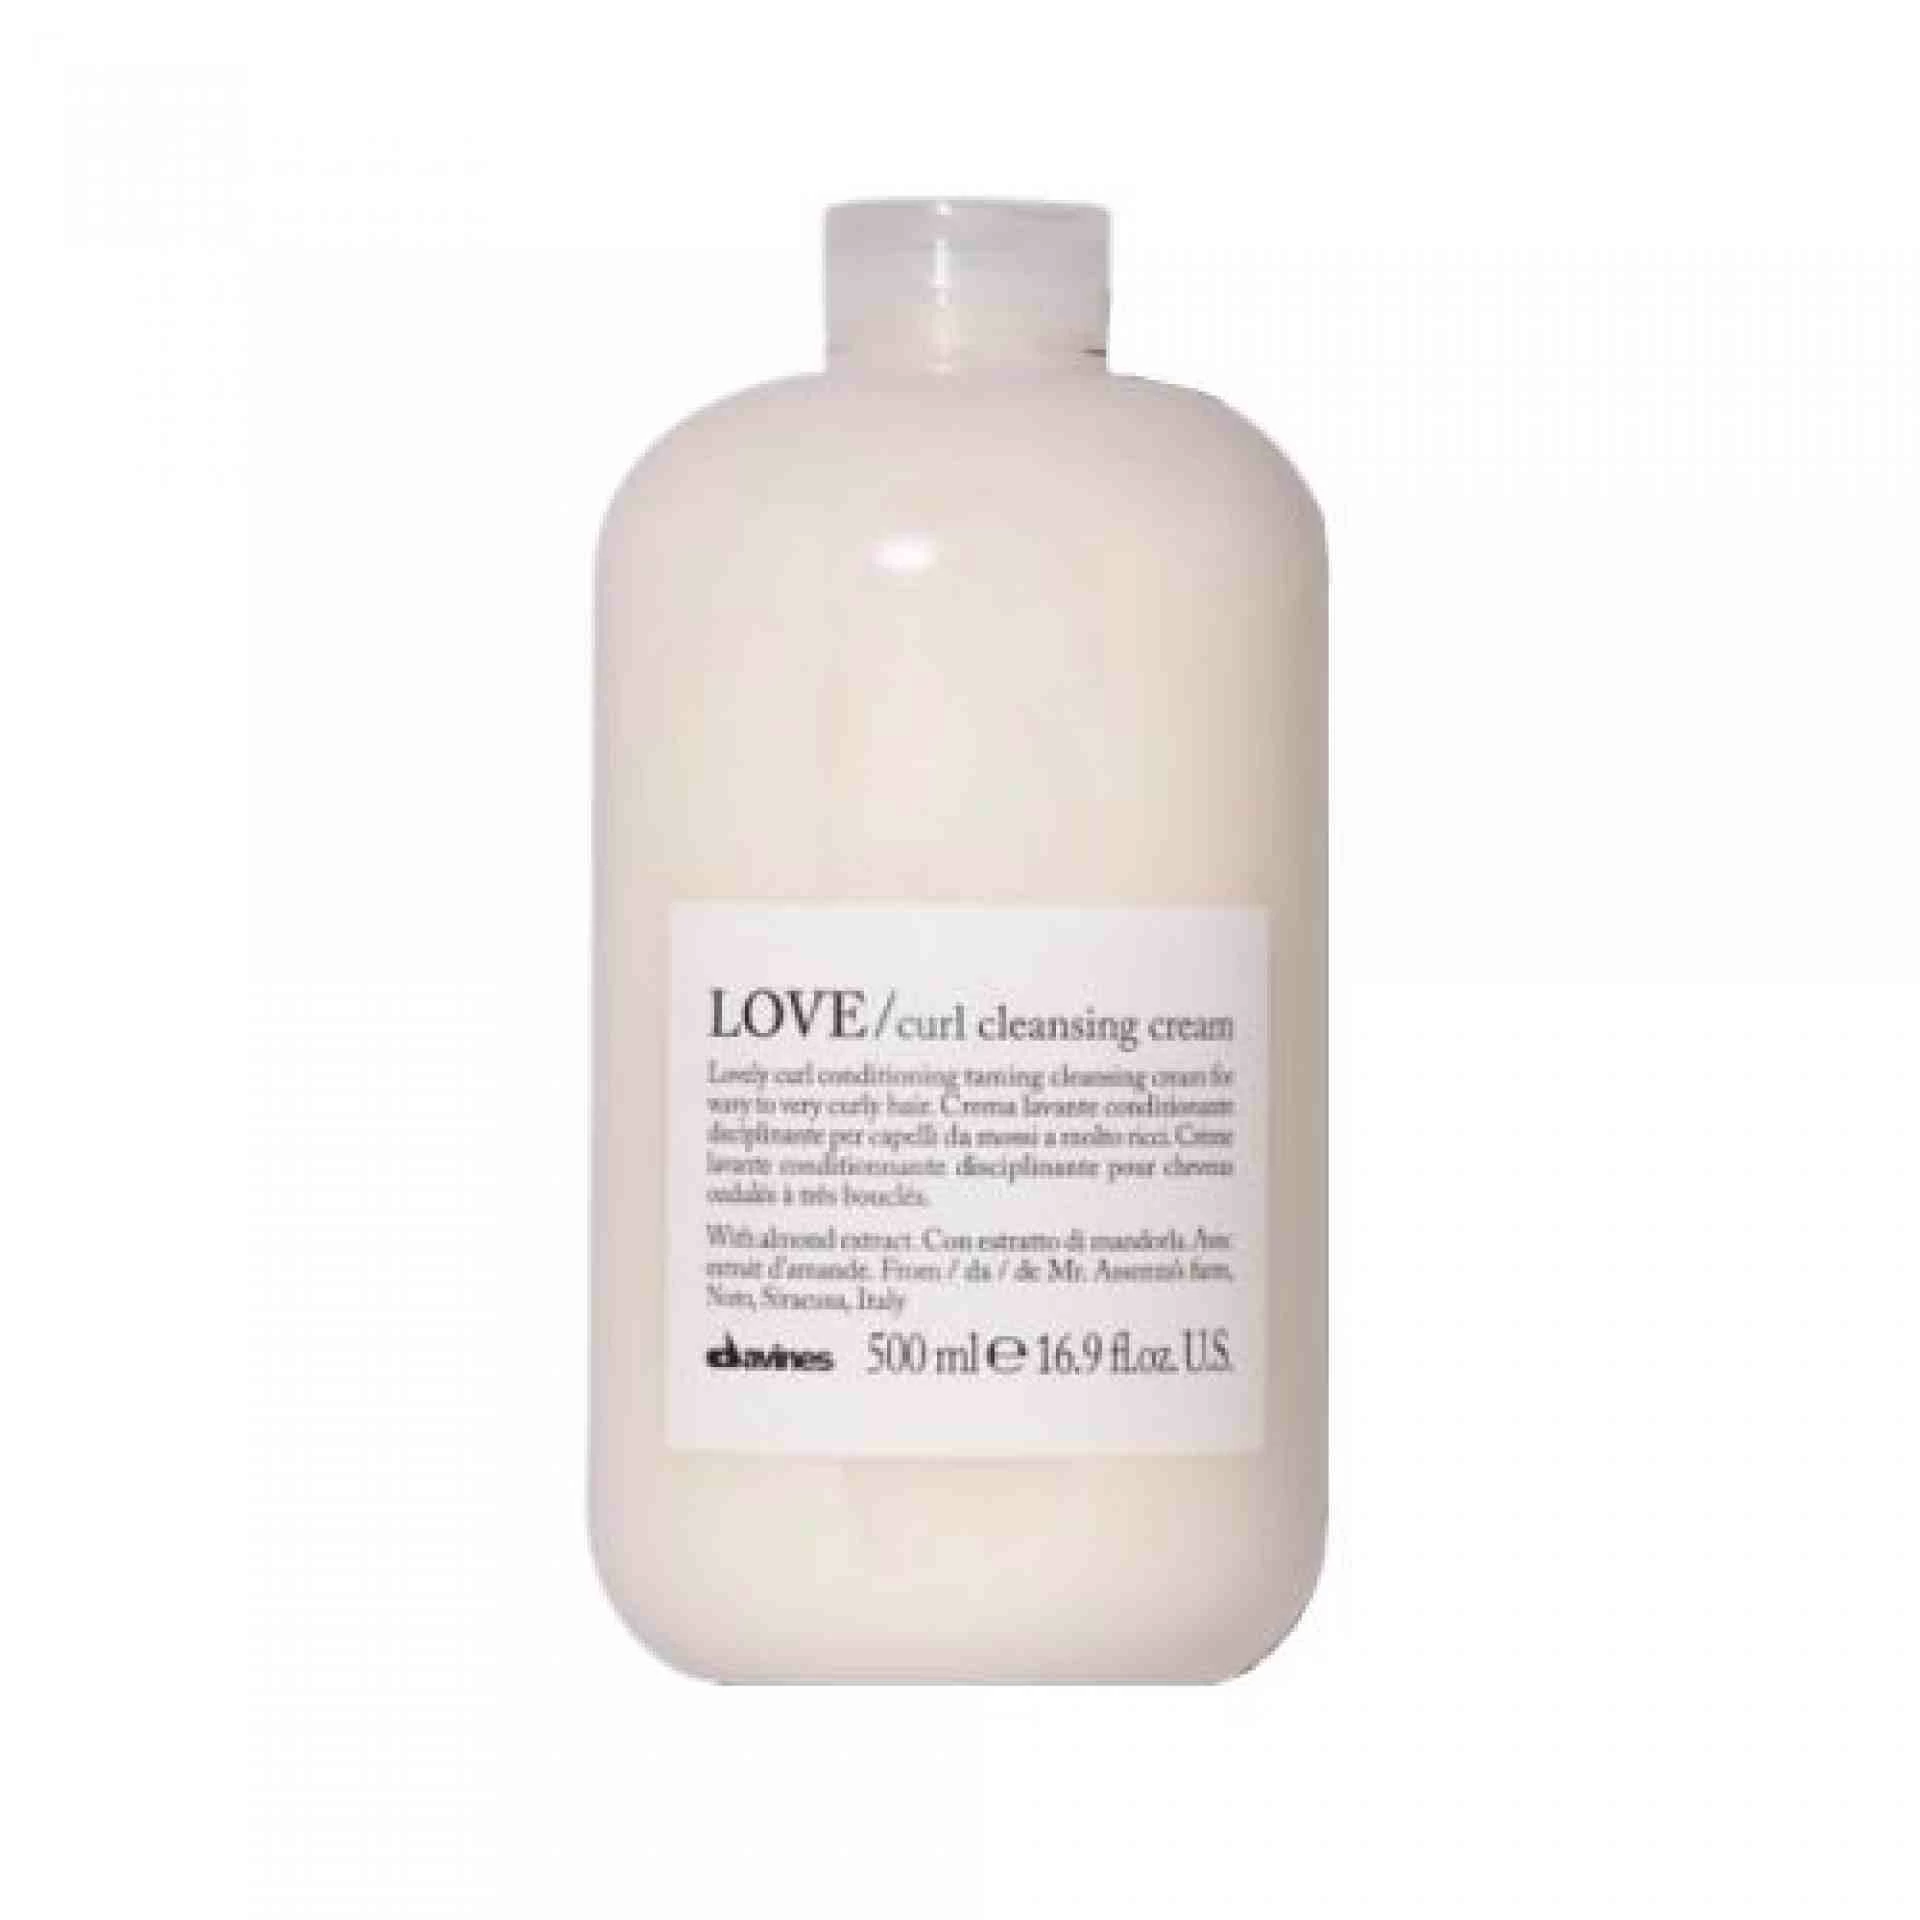 LOVE CURL / Cleansing Cream | Crema limpiadora y acondicionadora 500ml - Essential Haircare - Davines ®